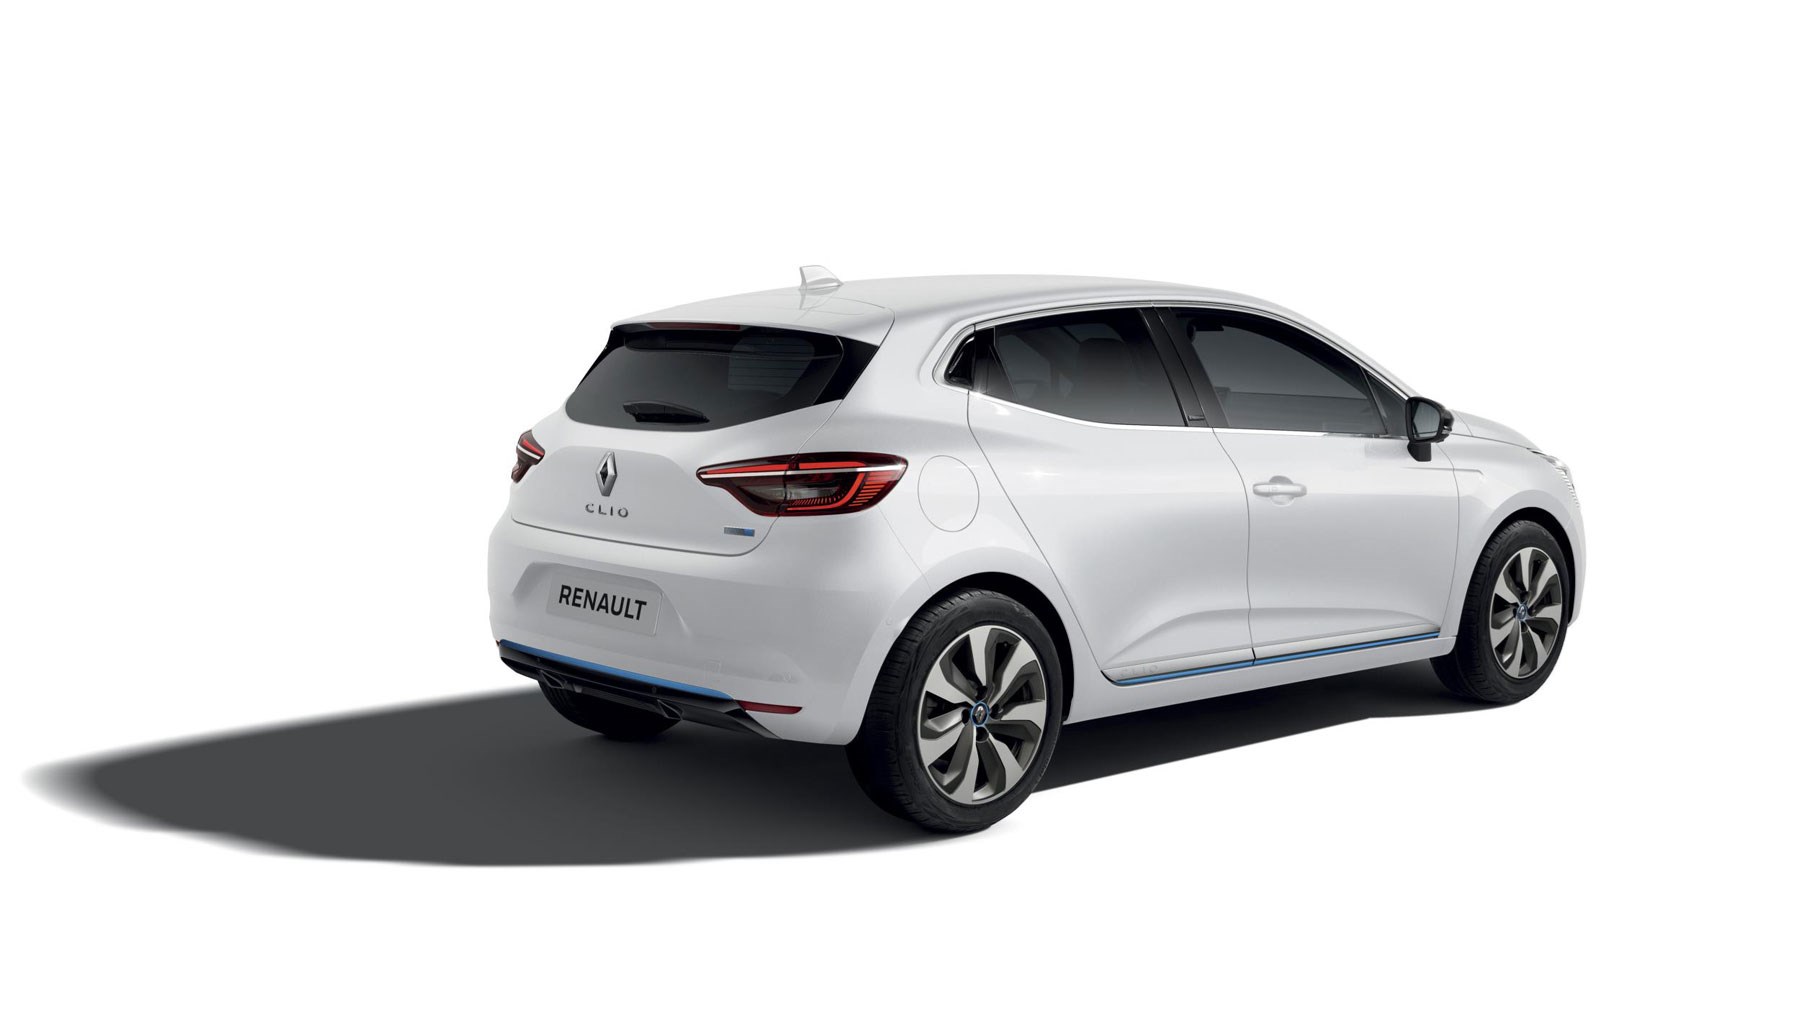 New Renault Clio E-Tech full hybrid - 5-door city car